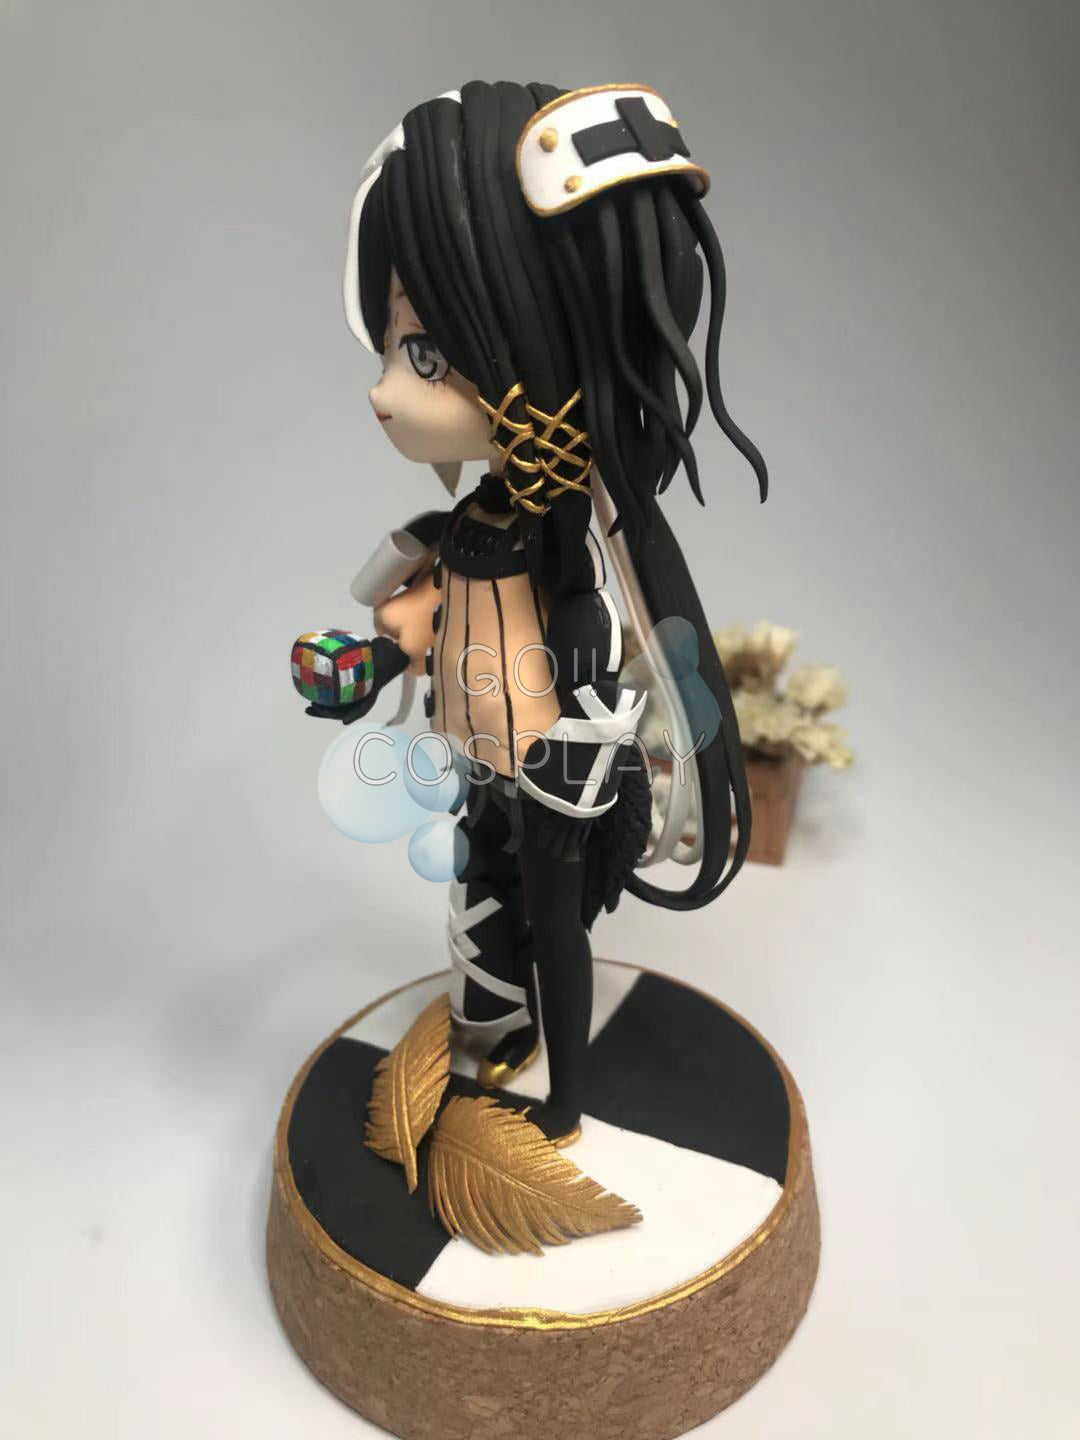 Zesshi Zetsumei Chibi Figurine for Sale